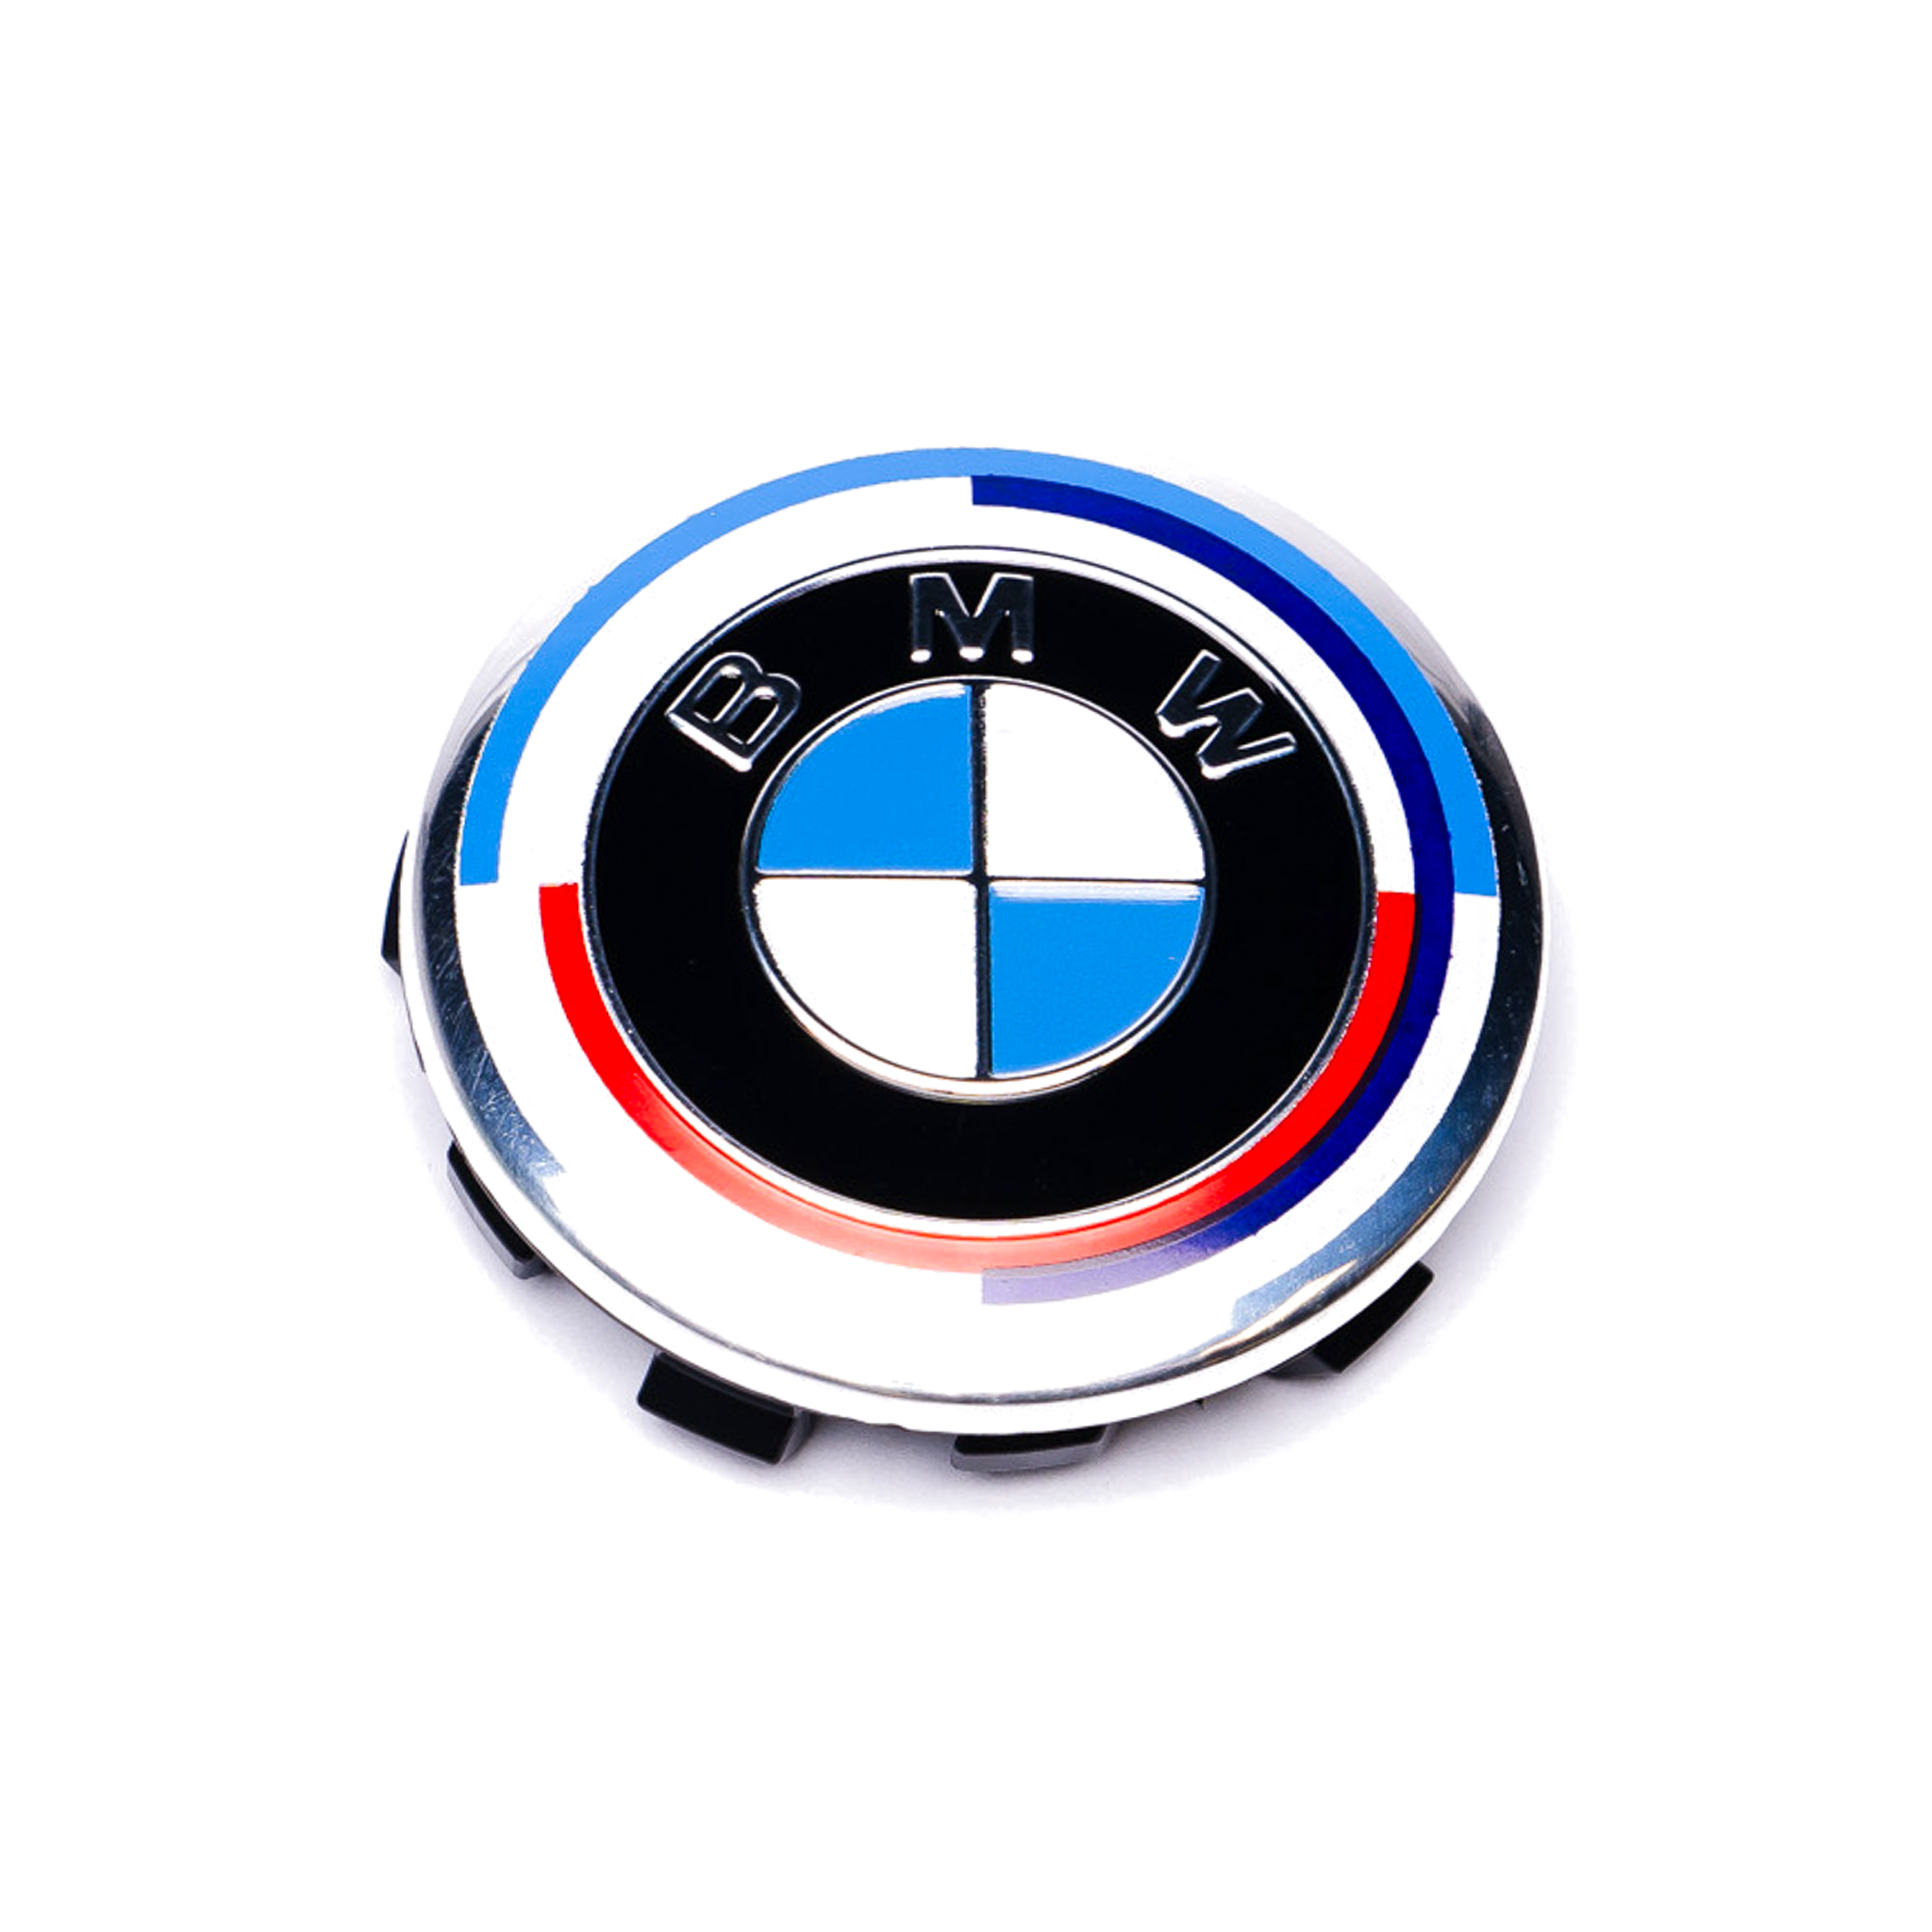 Exon BMW 50th Anniversary Style Wheel Center Cap 56mm for BMW 1 2 3 5 7 8 X1 X2 X3 X4 X5 X6 X7